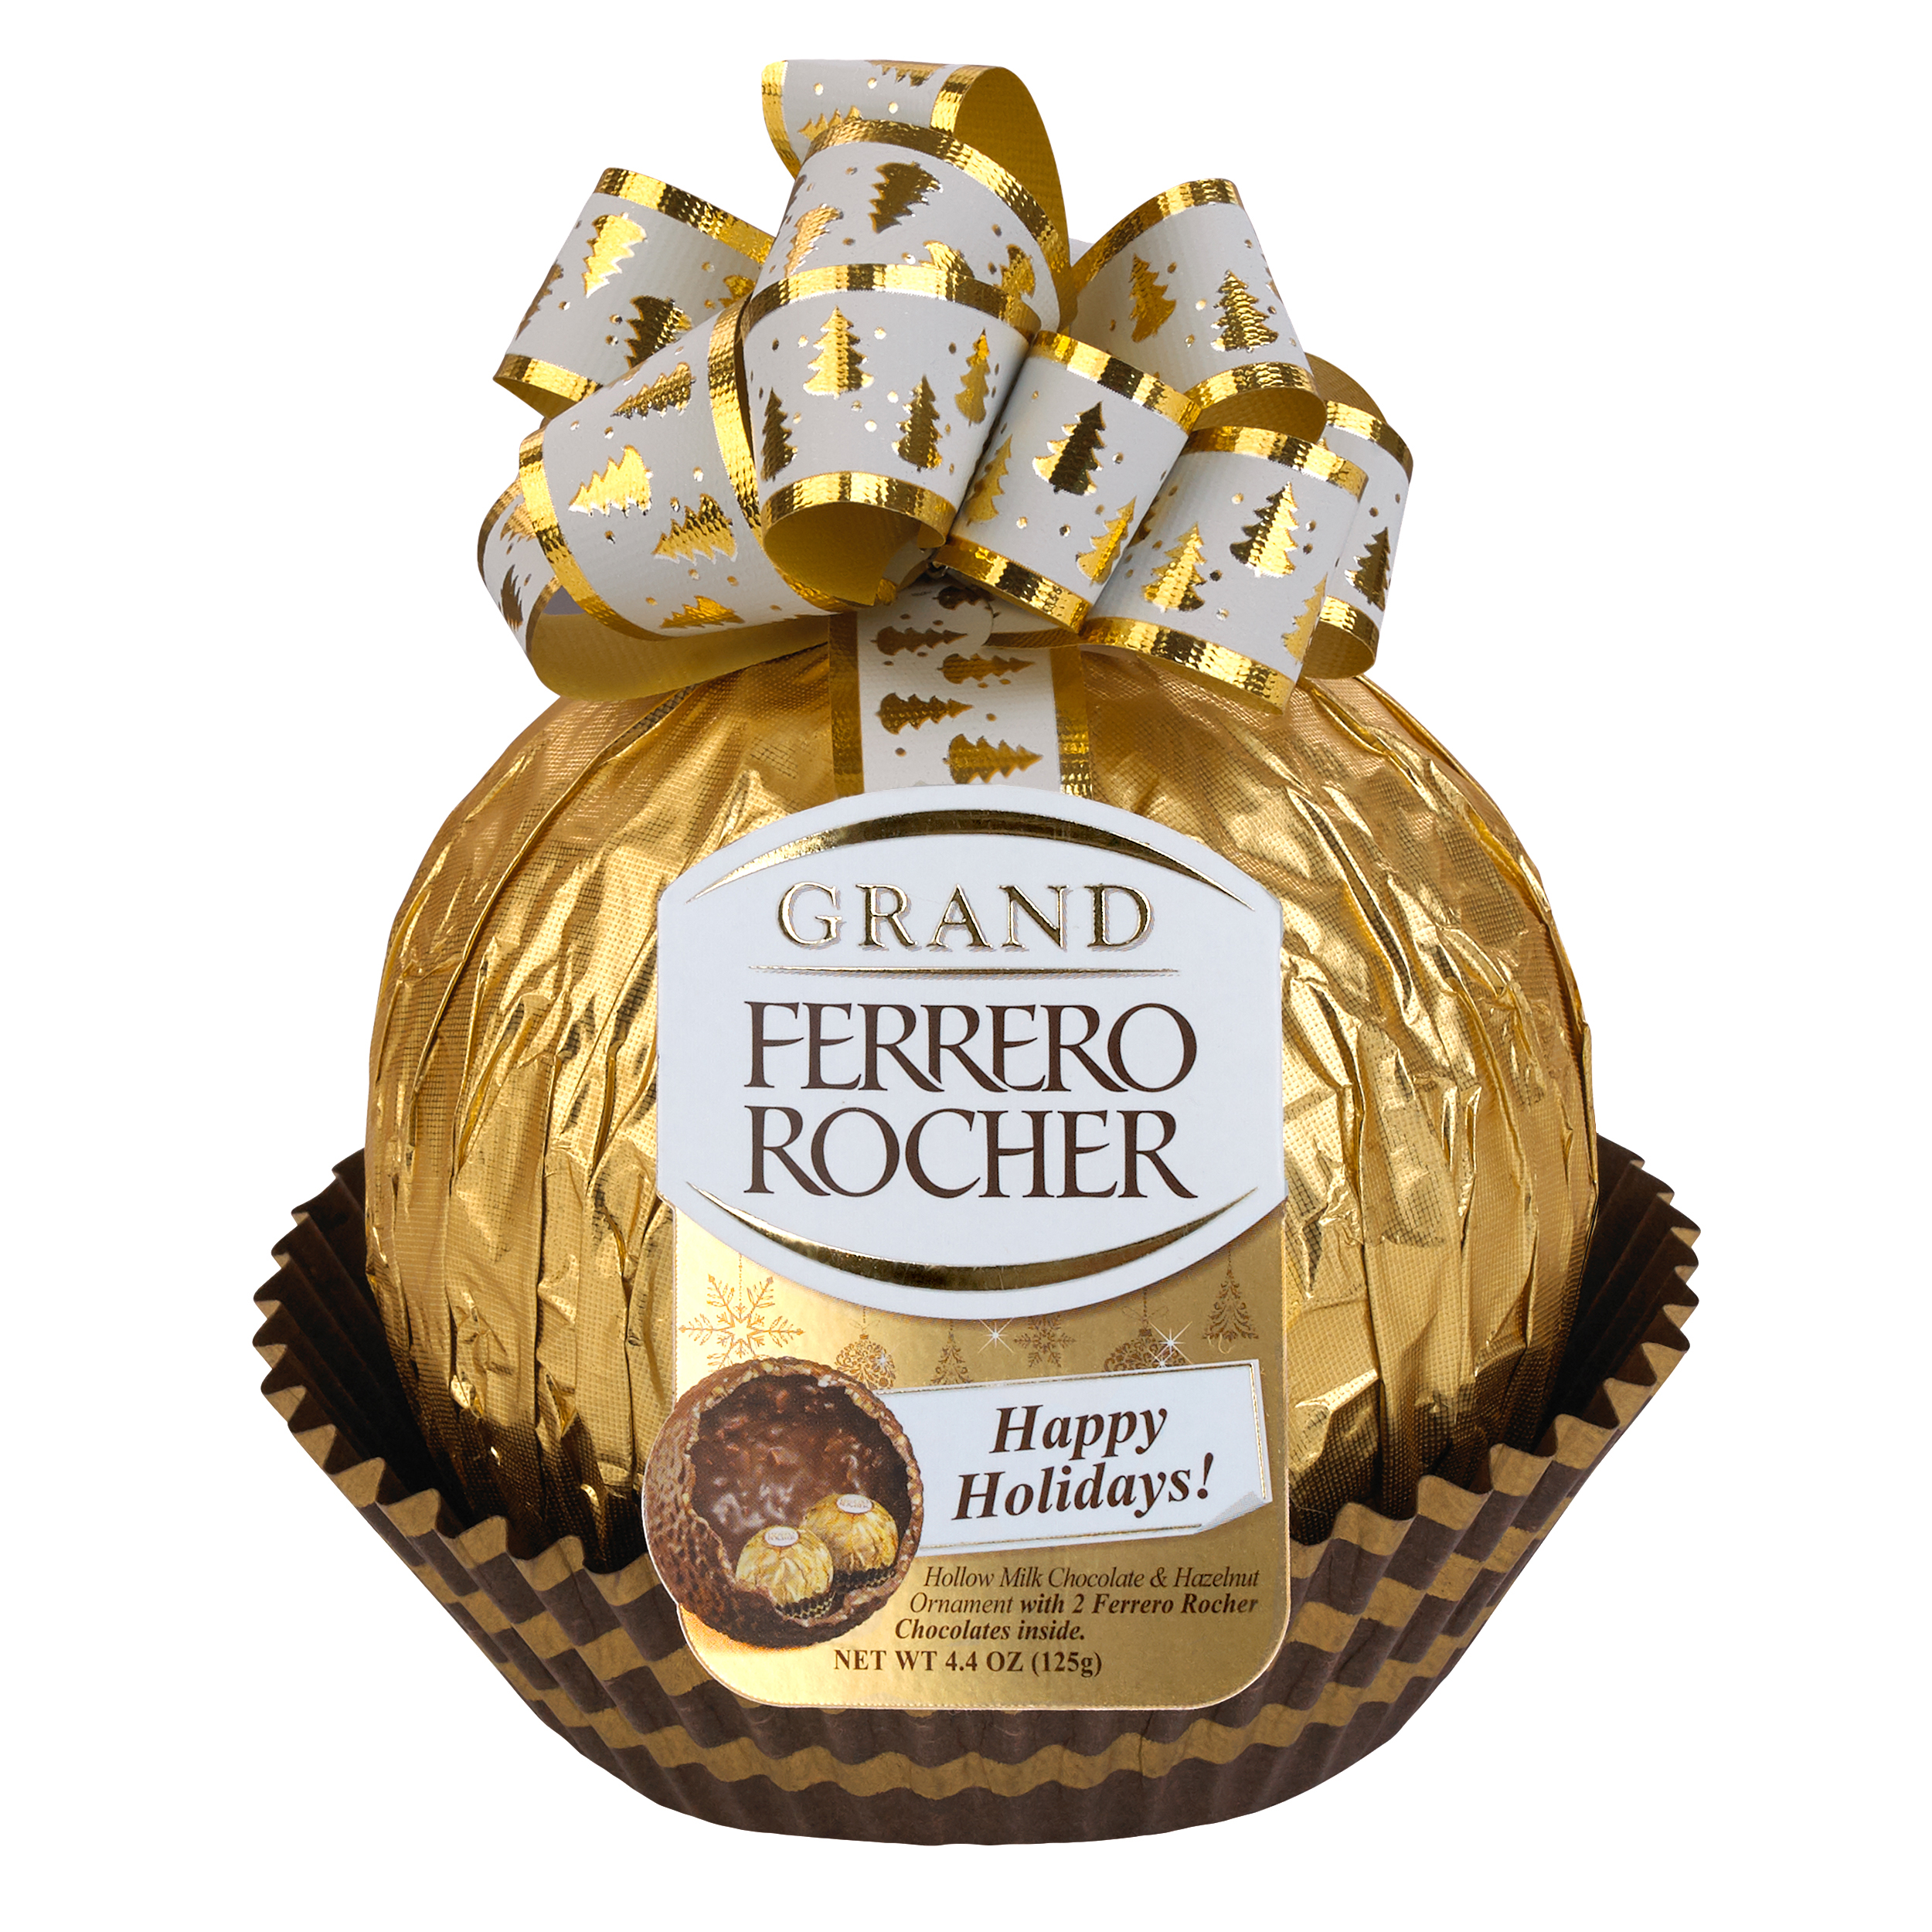 Ferrero Rocher Fine Hazelnut Milk Chocolate, 12 Count, Chocolate Christmas Candy Gift Box, Great for Holiday Entertaining, 5.3 oz